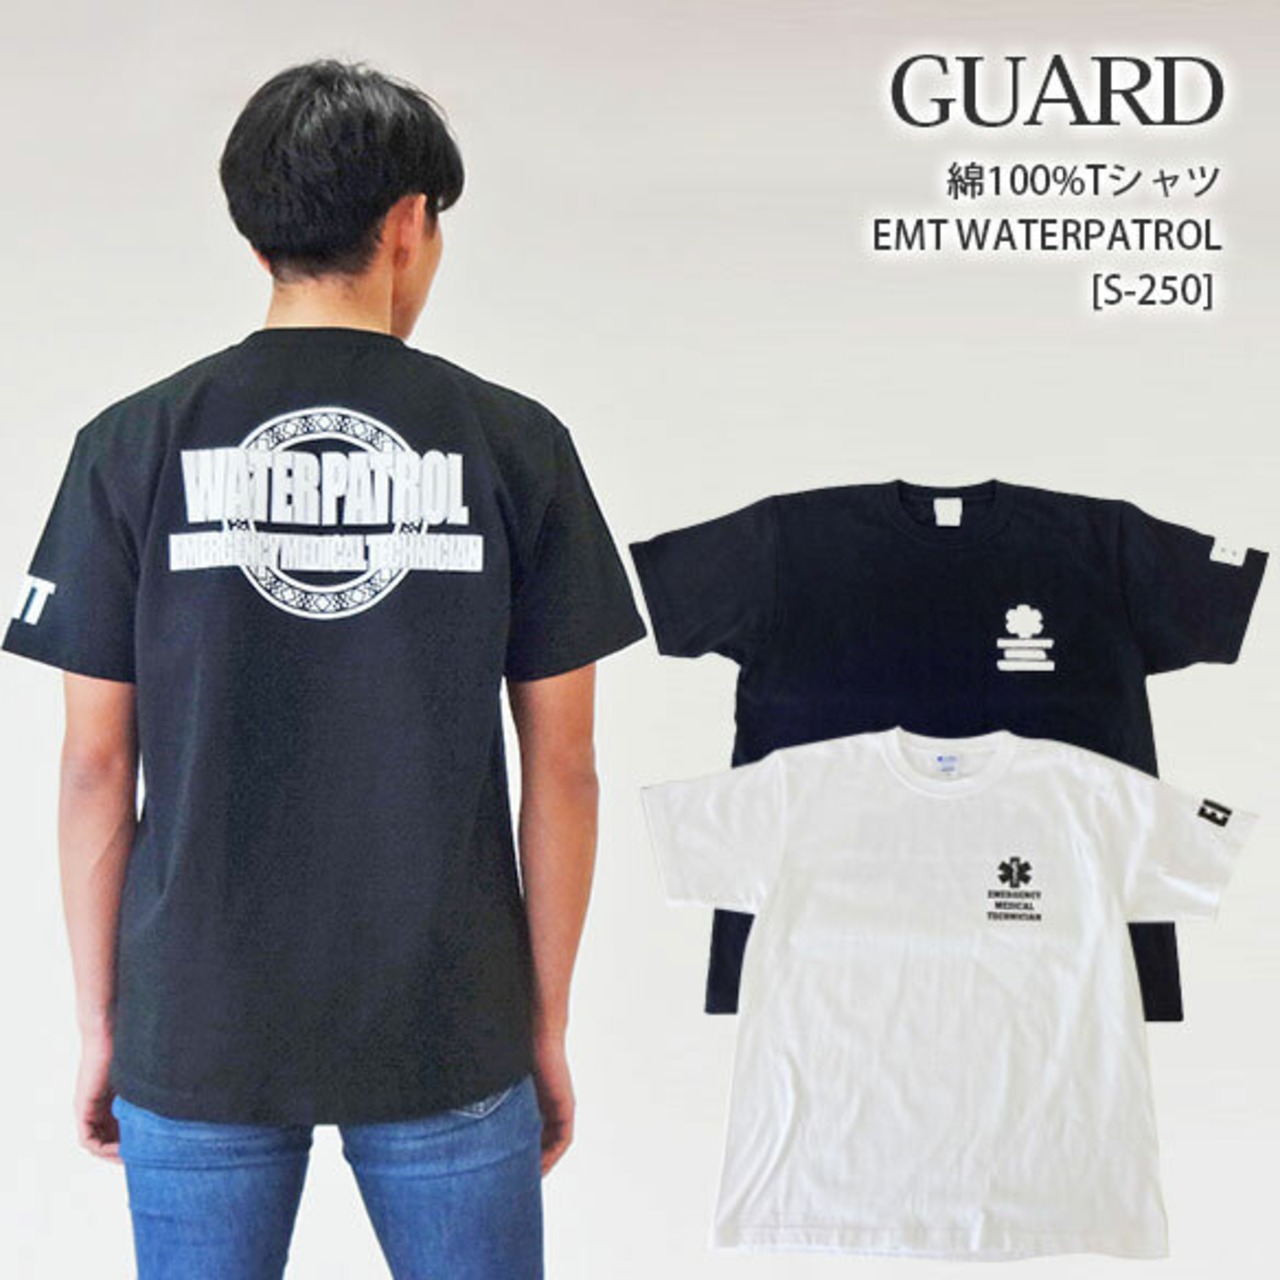 GUARD (ガード) 綿100% Tシャツ EMT WATERPATROL [S-250]